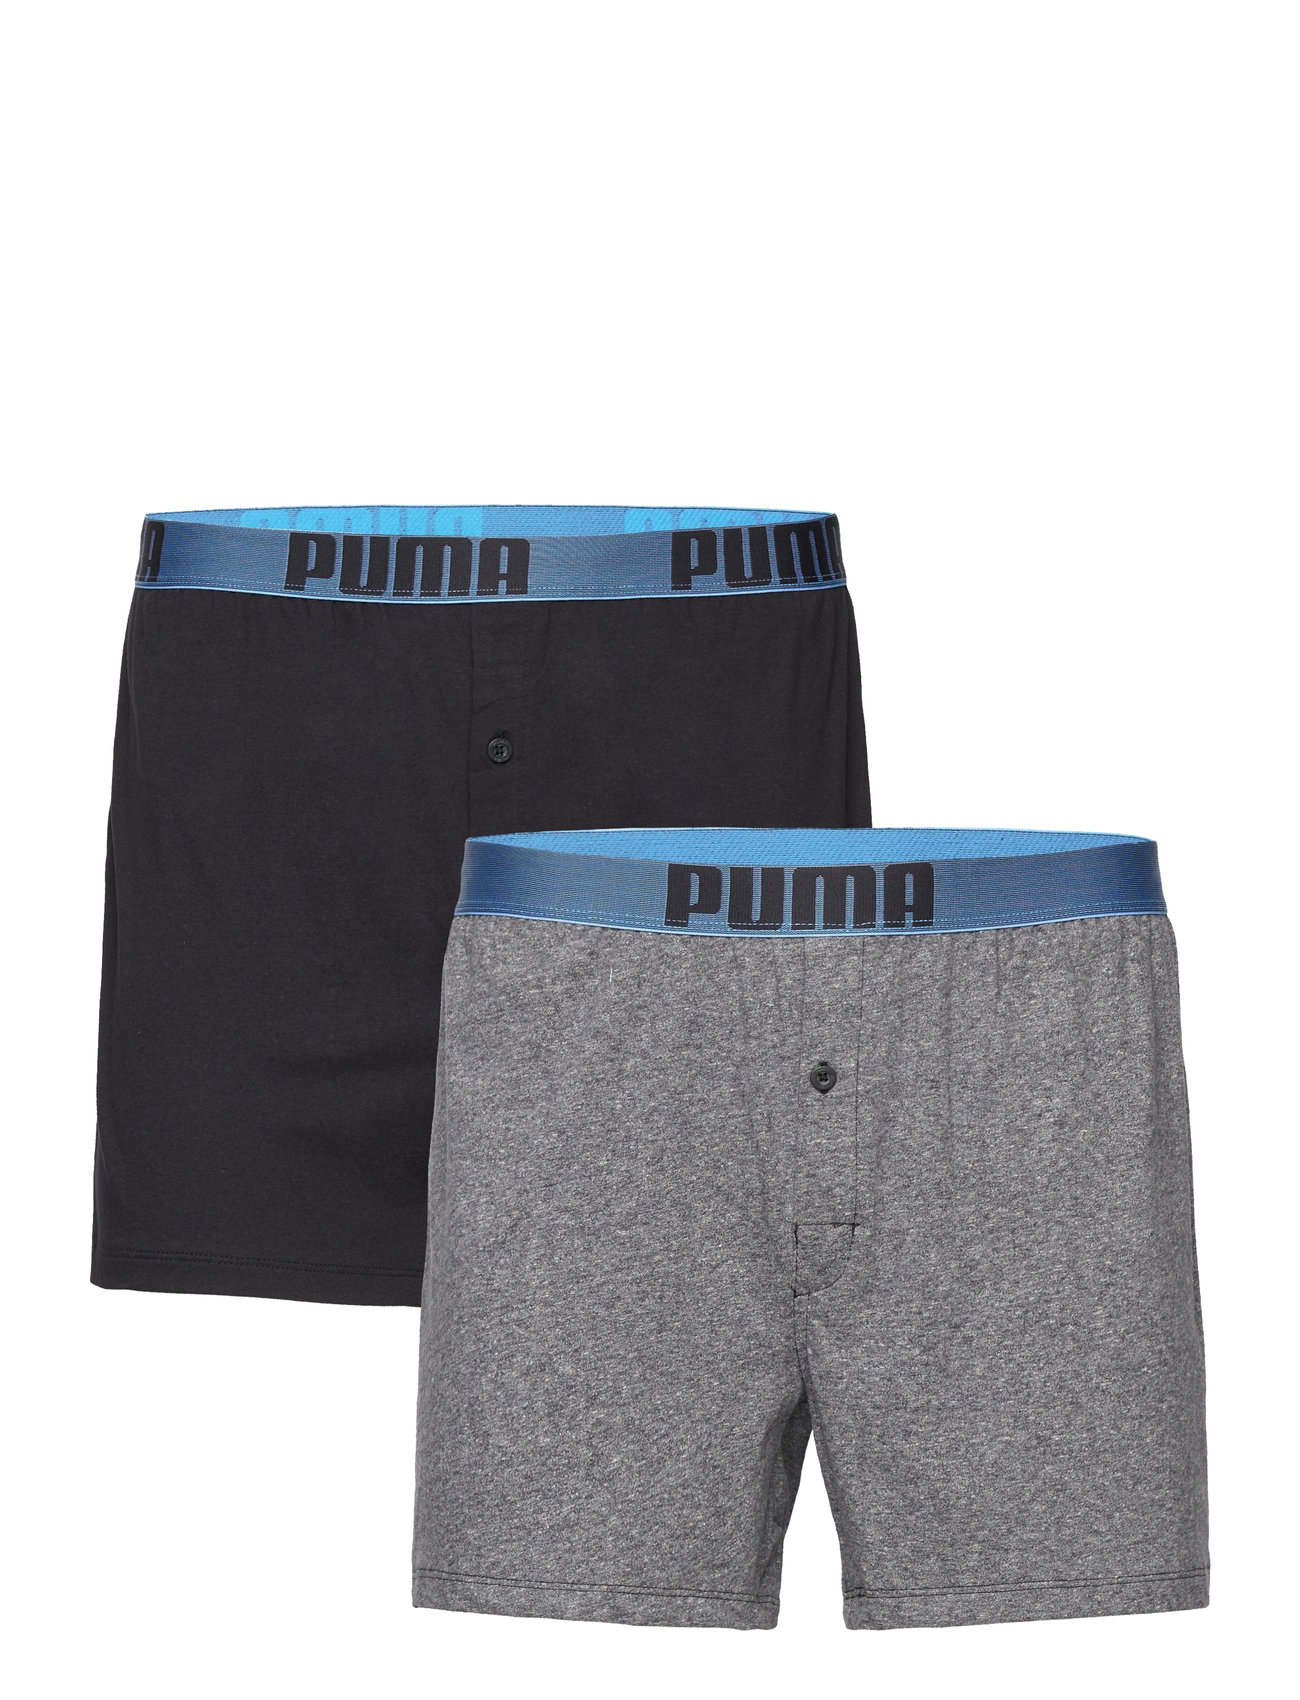 Underpants - Loose Jersey Puma Boxer PUMA 2p Fit Men